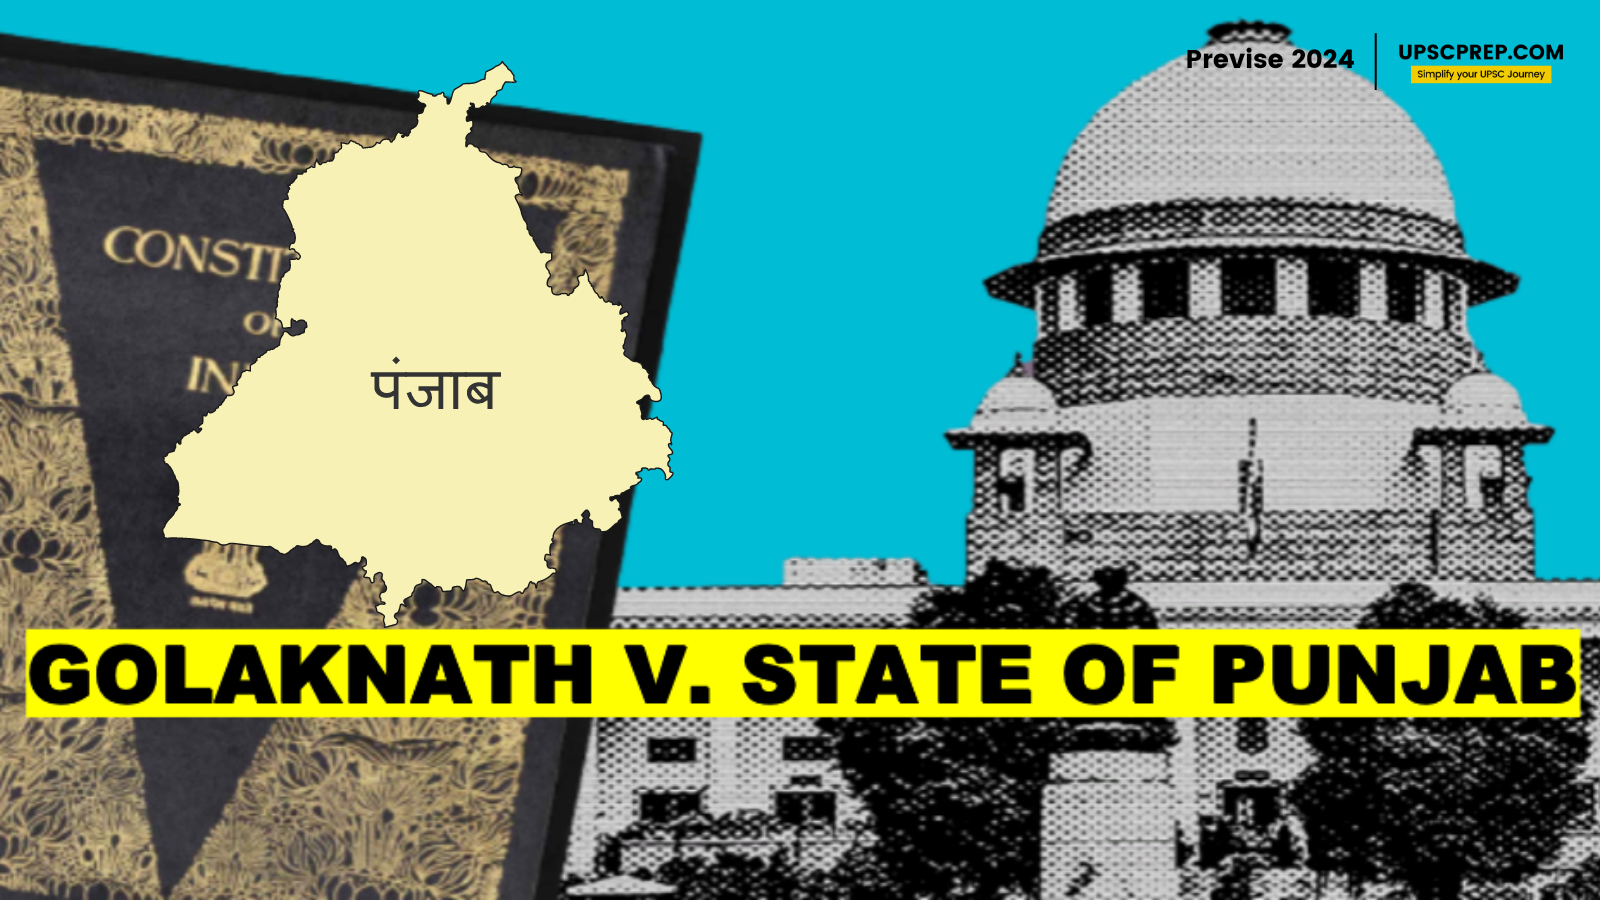 Golaknath V. State of Punjab Case 1967 | UPSC | Supreme Court Cases 